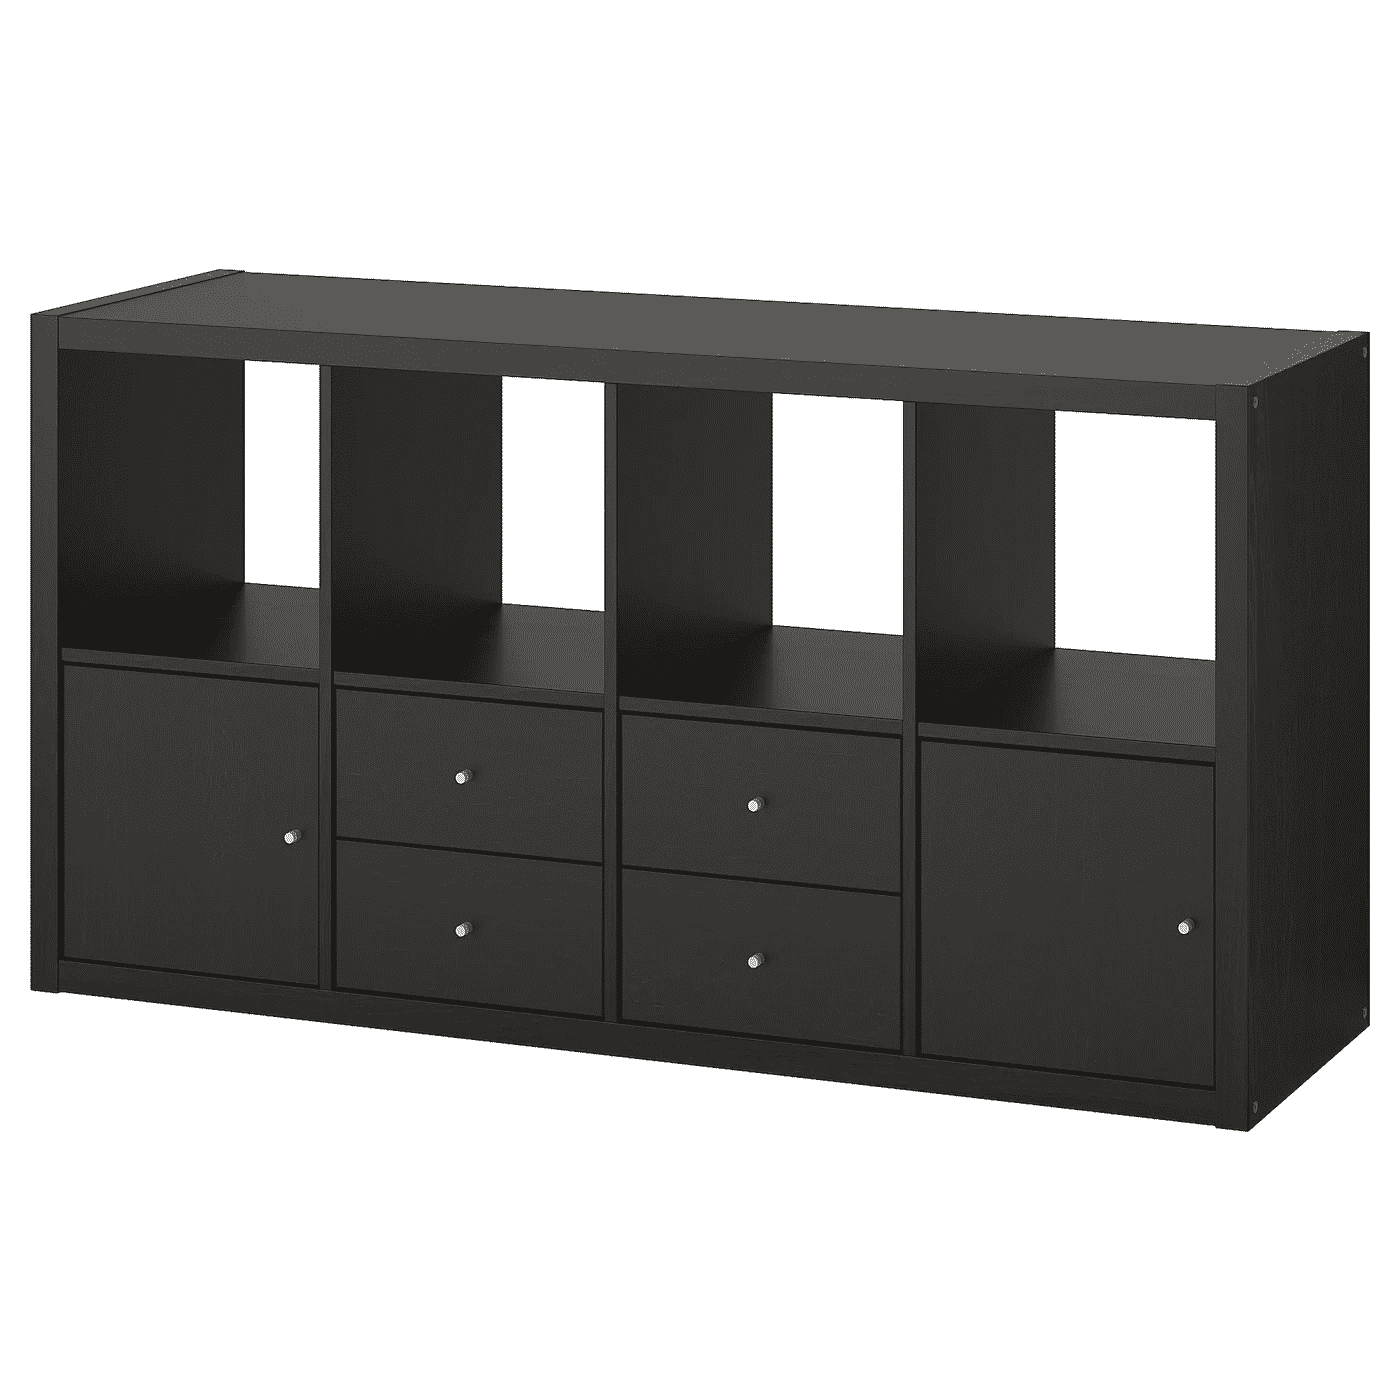 KALLAX Shelf unit with 4 inserts, black-brown